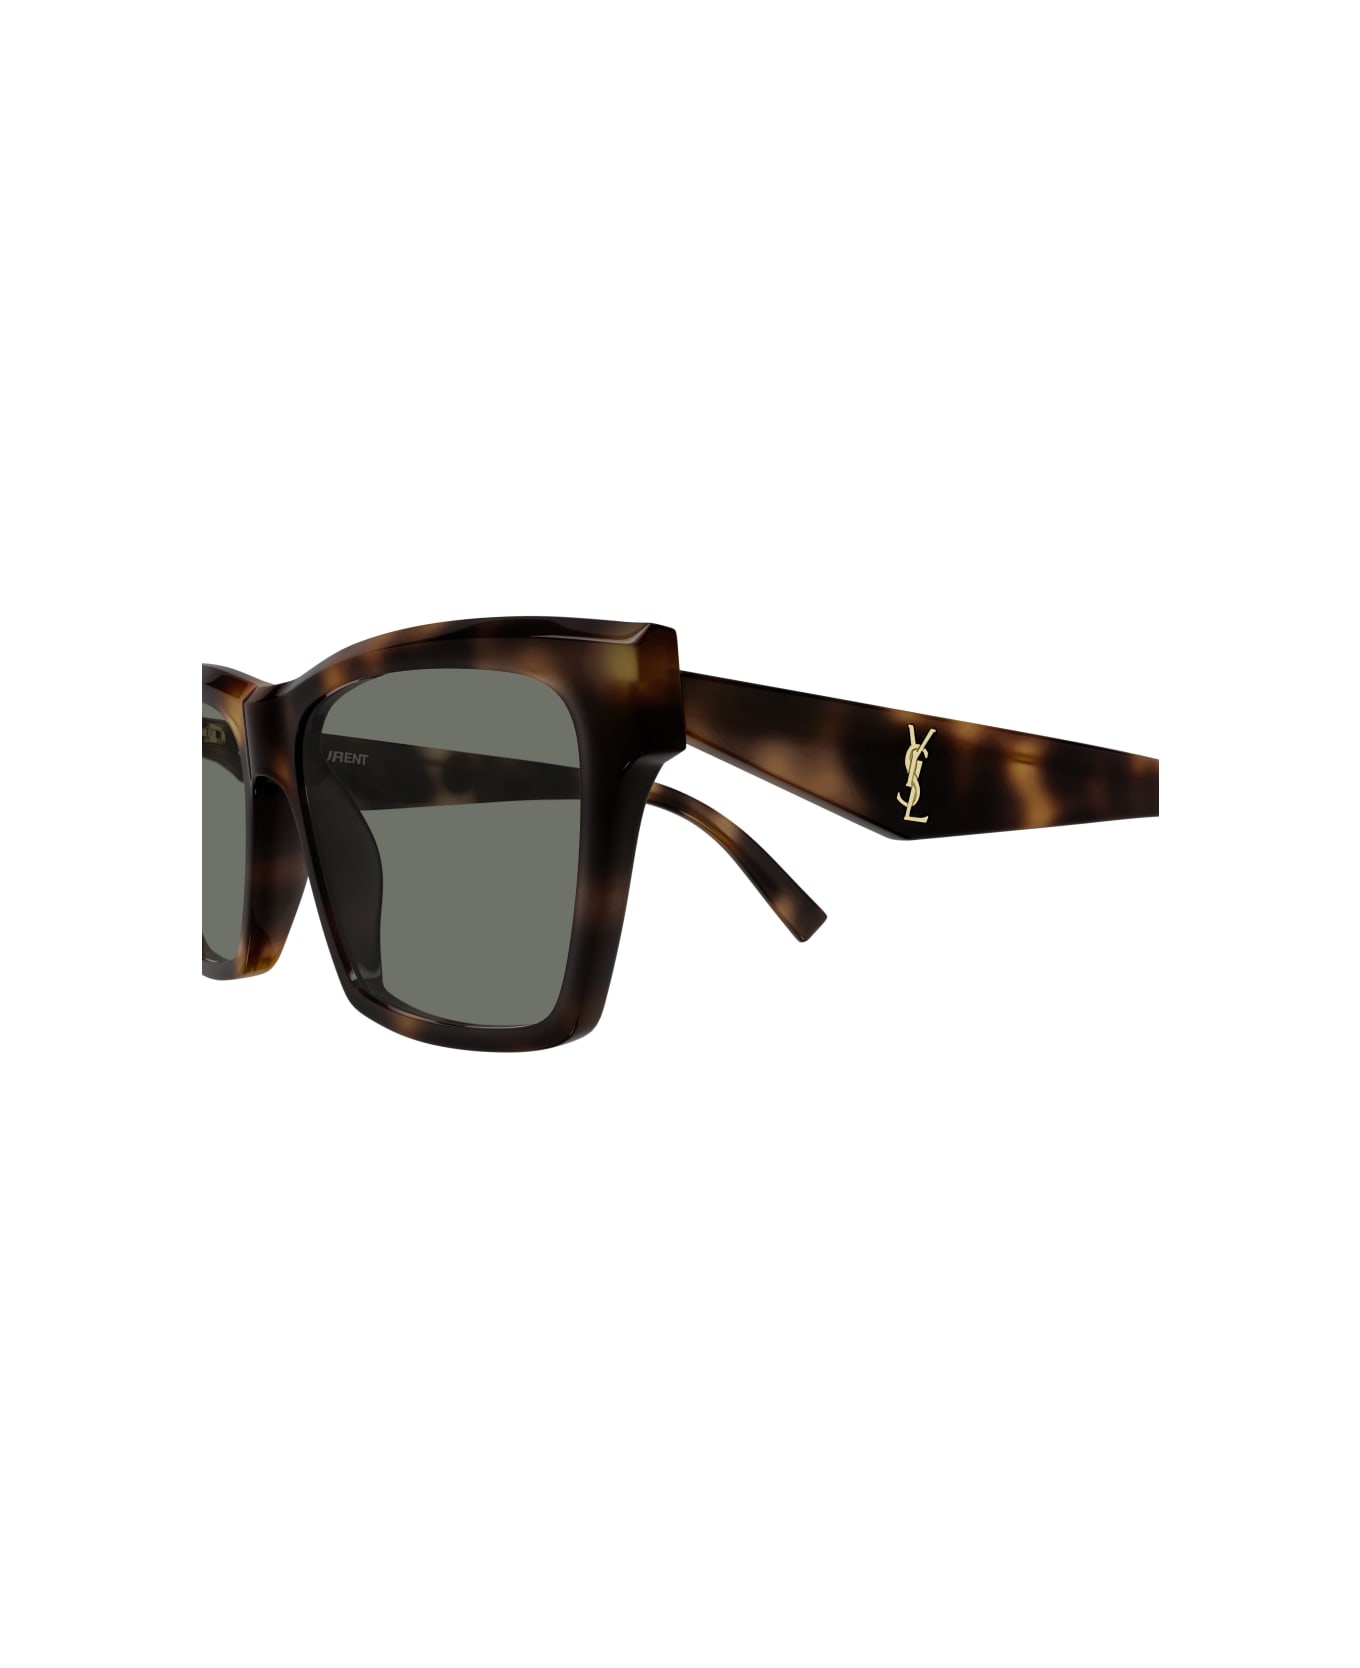 Saint Laurent Eyewear SL M104 Sunglasses - Havana Havana Green